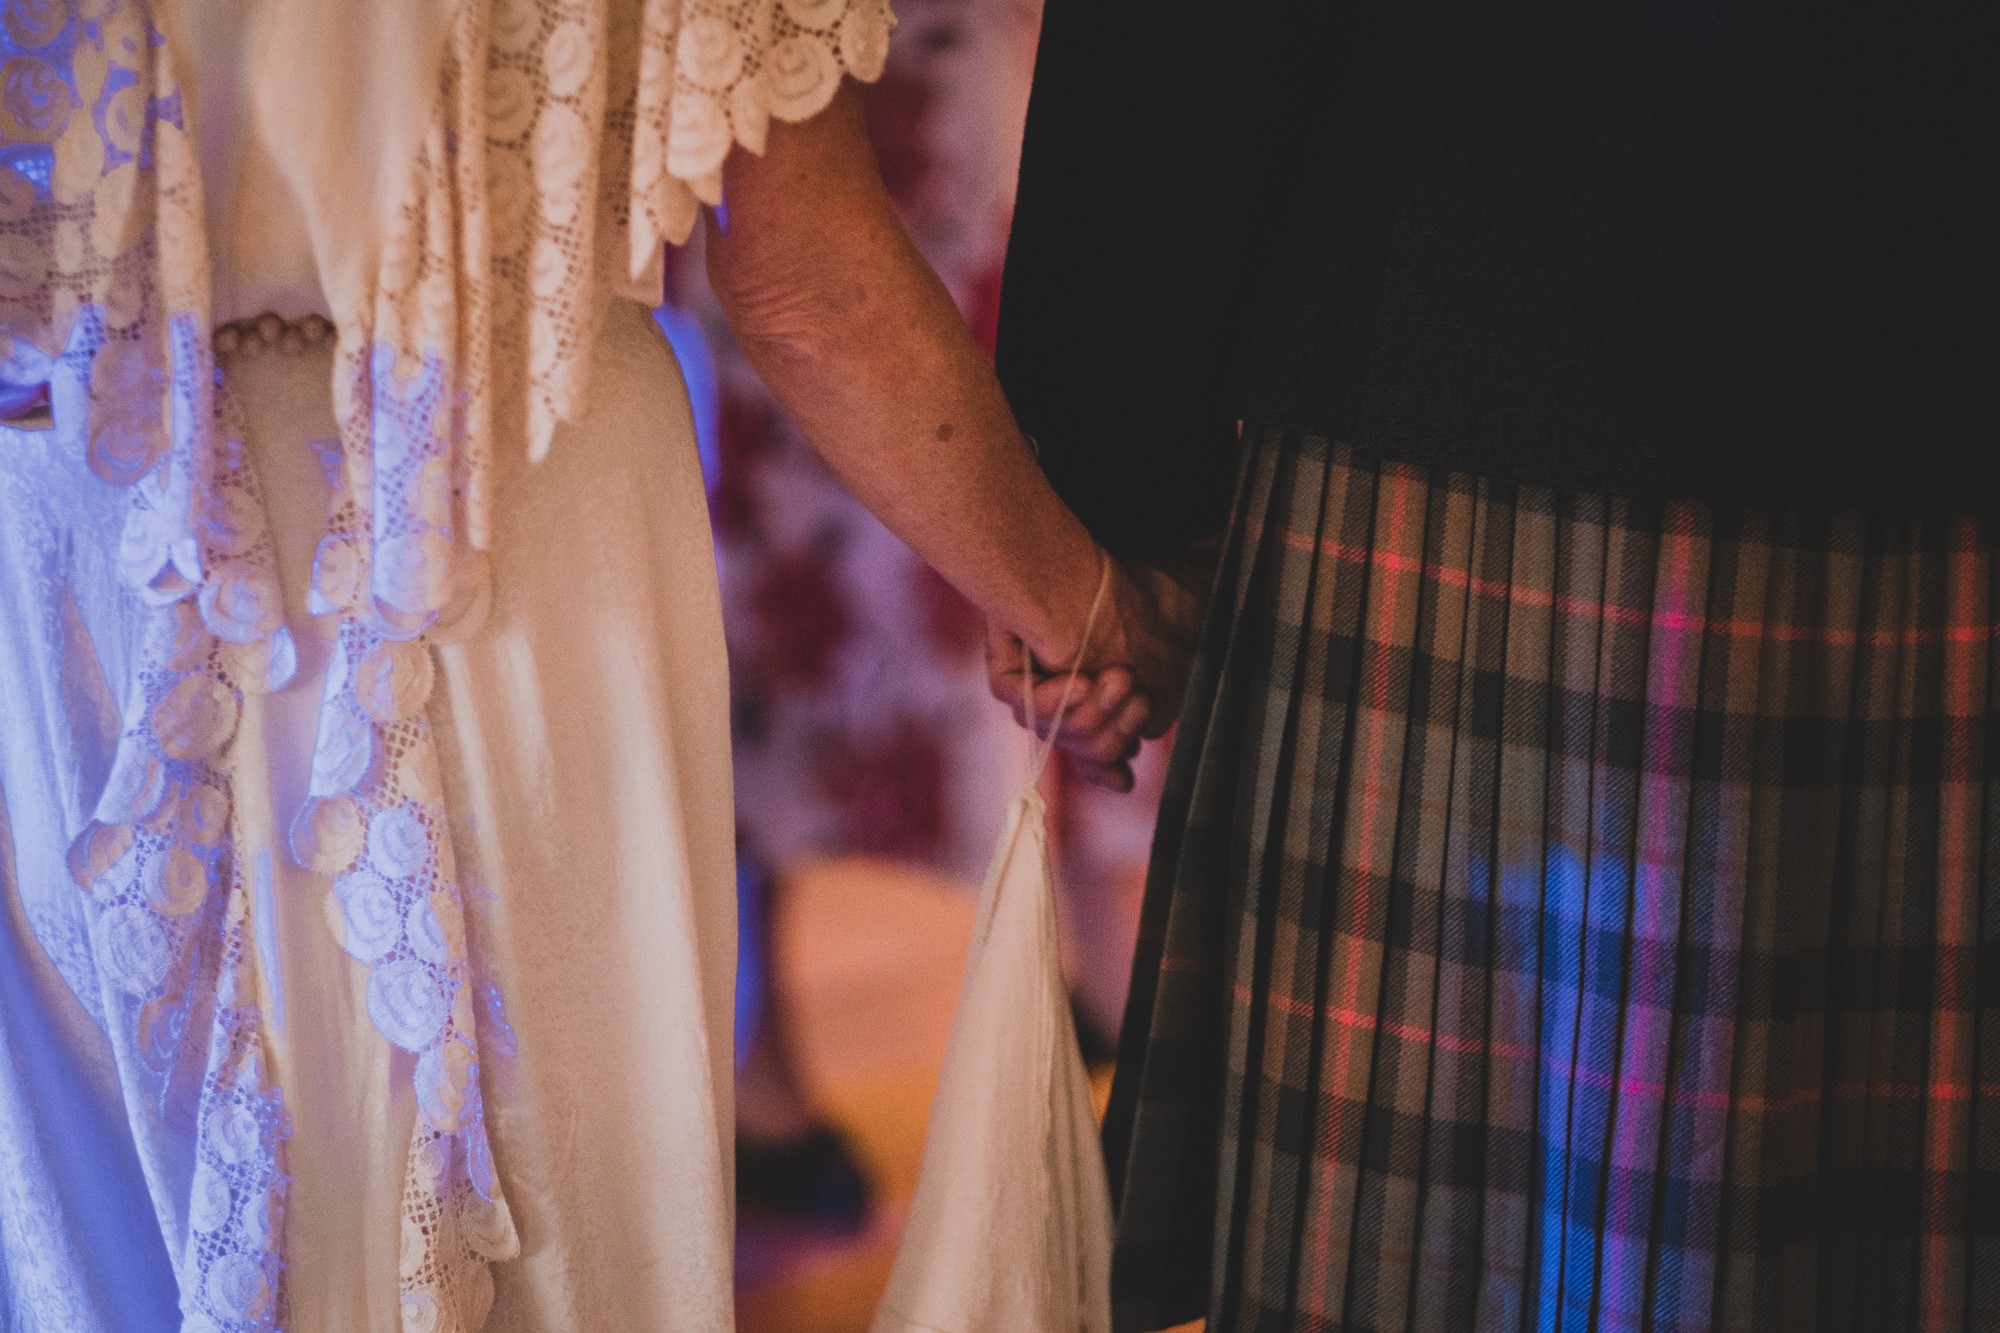 Documentary Wedding Scotland